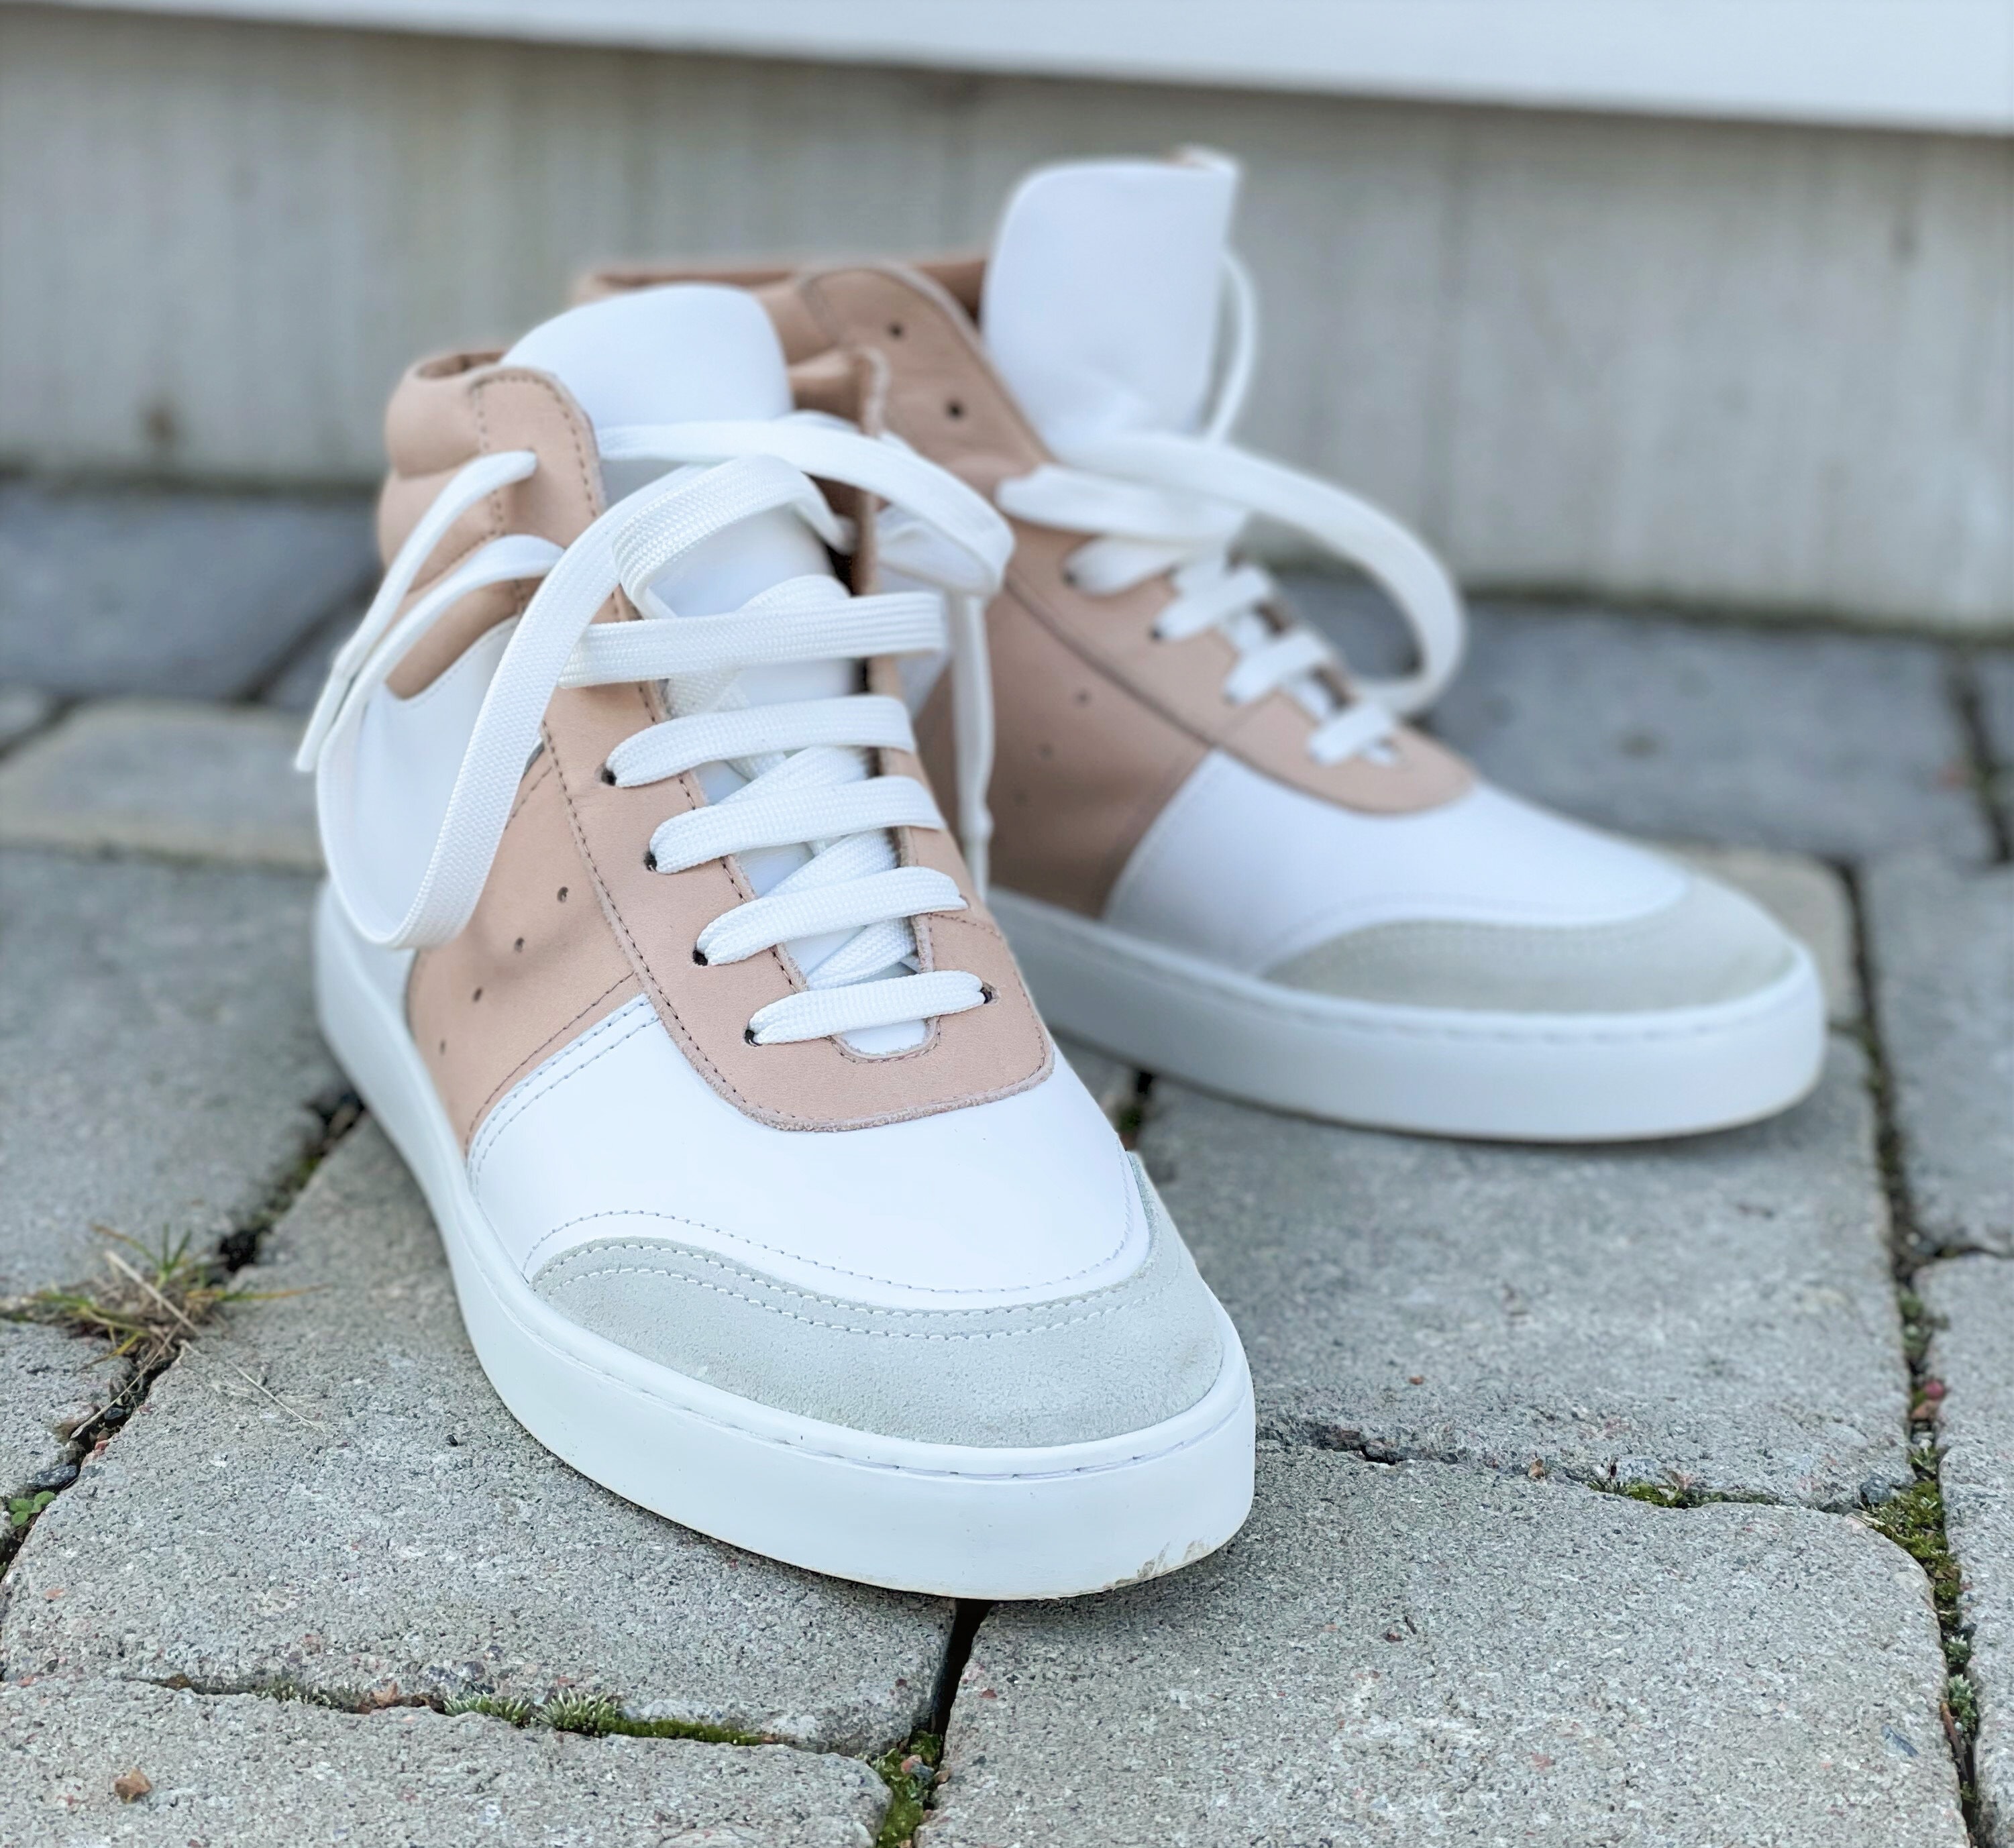 Base high sneaker - white/beige